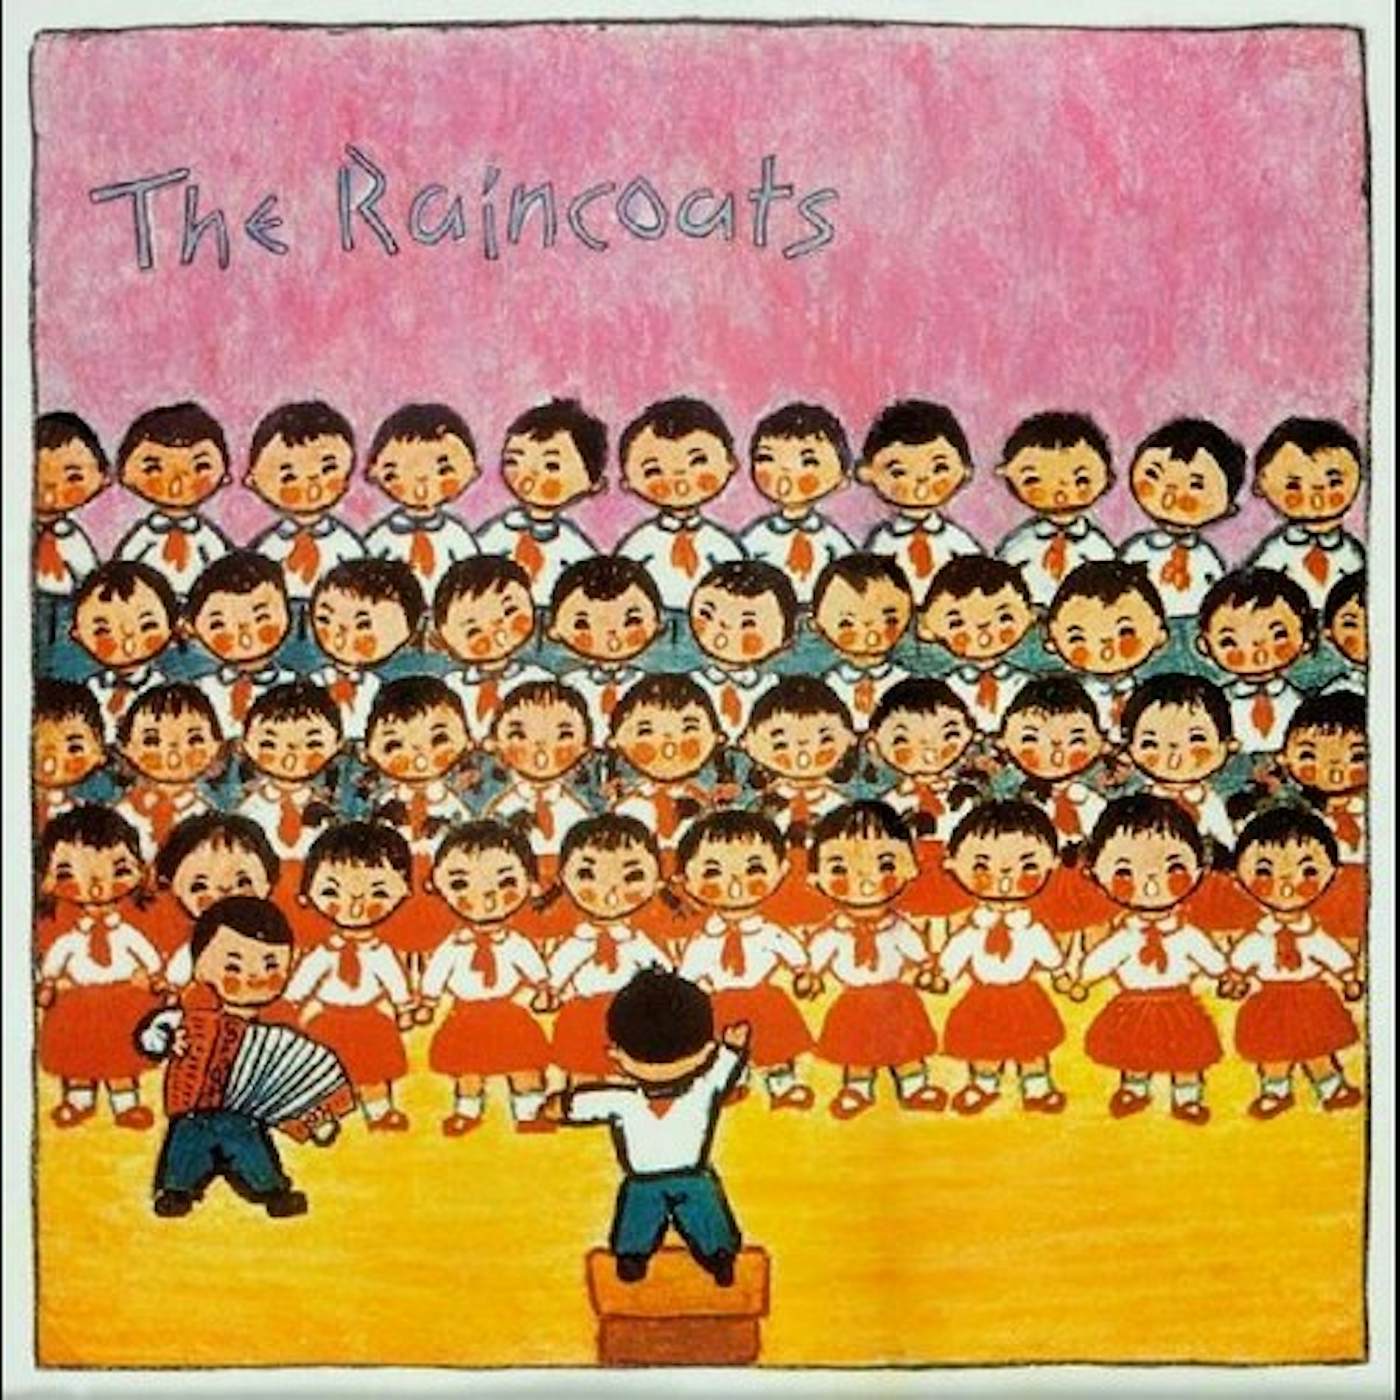 The Raincoats S/T Vinyl Record